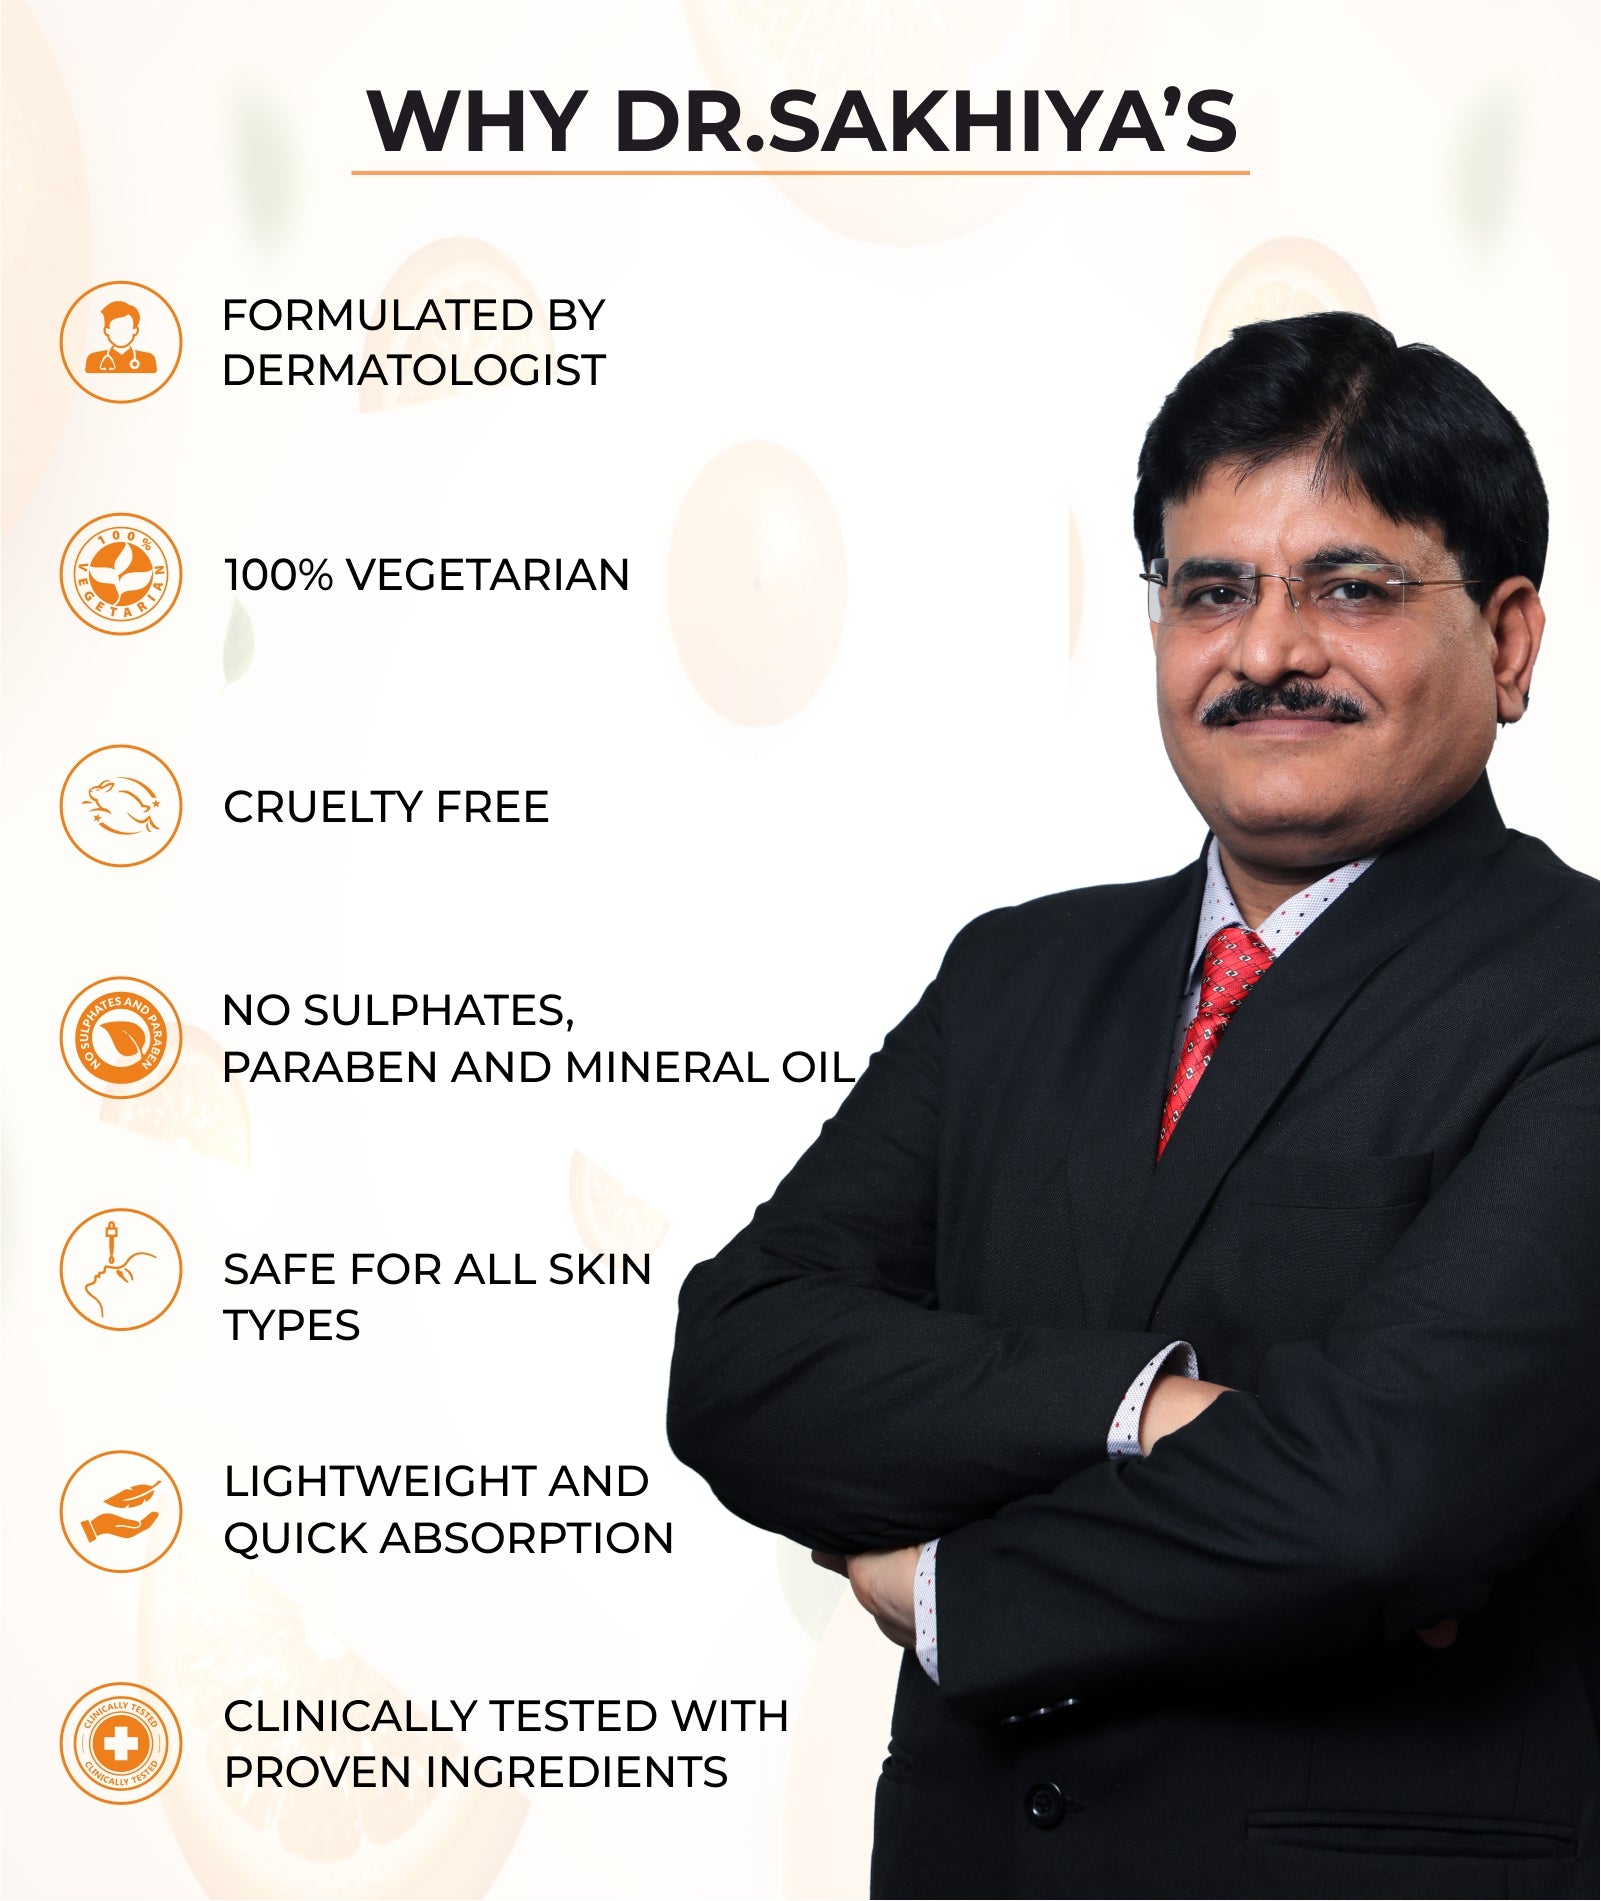 Why You Should Choose Dr. Sakhiya's Dermatologically Formulated Products